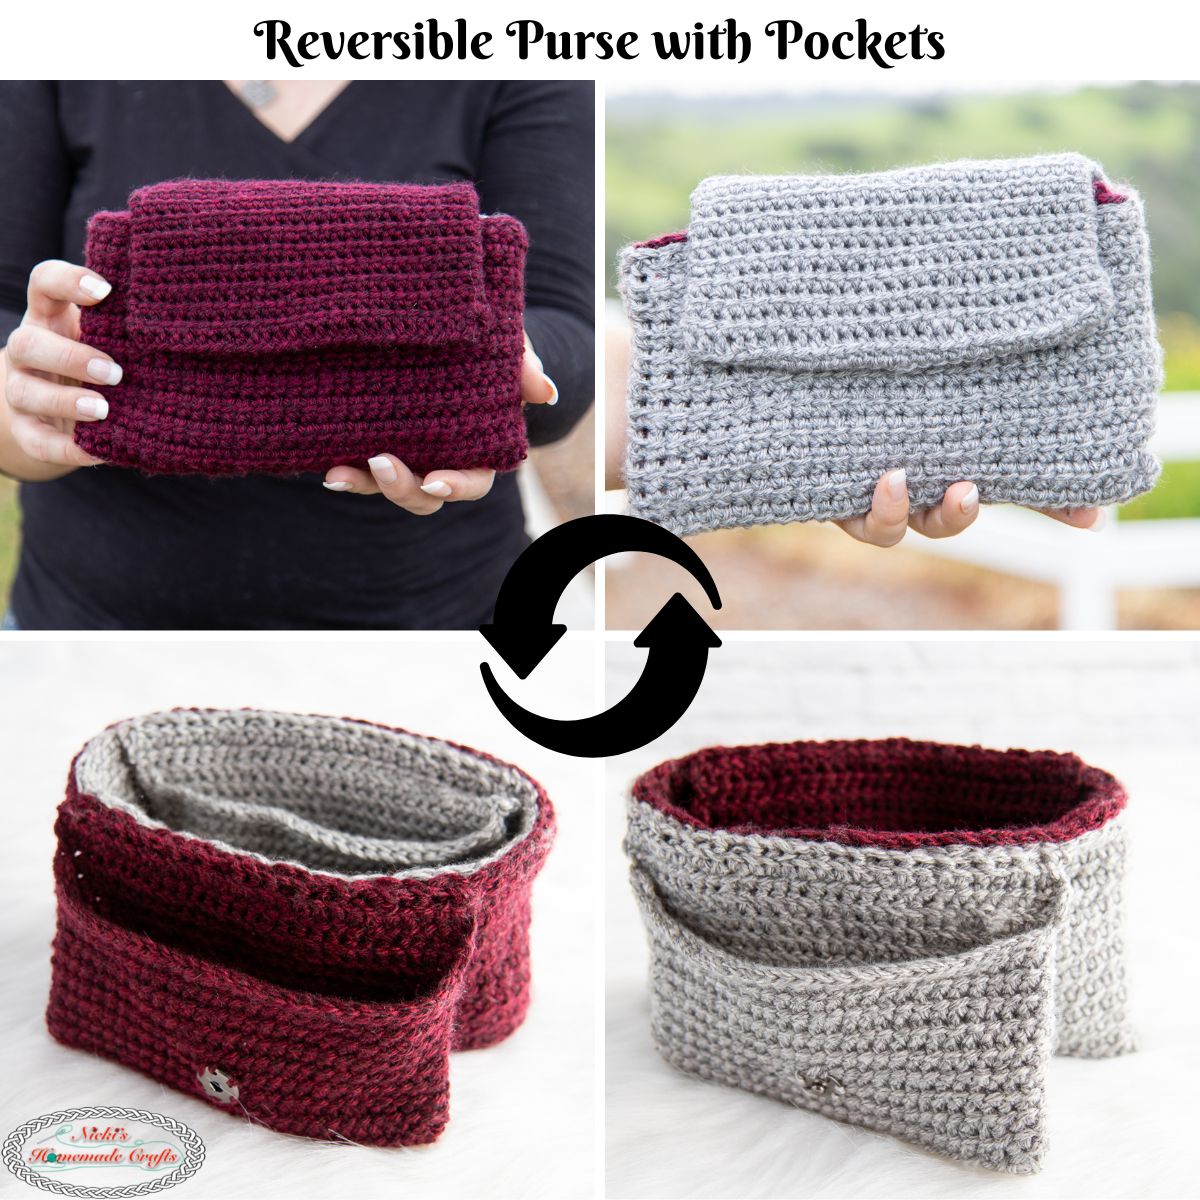 16 Free and Easy Modern Crochet Bag Patterns - Easy Crochet Patterns